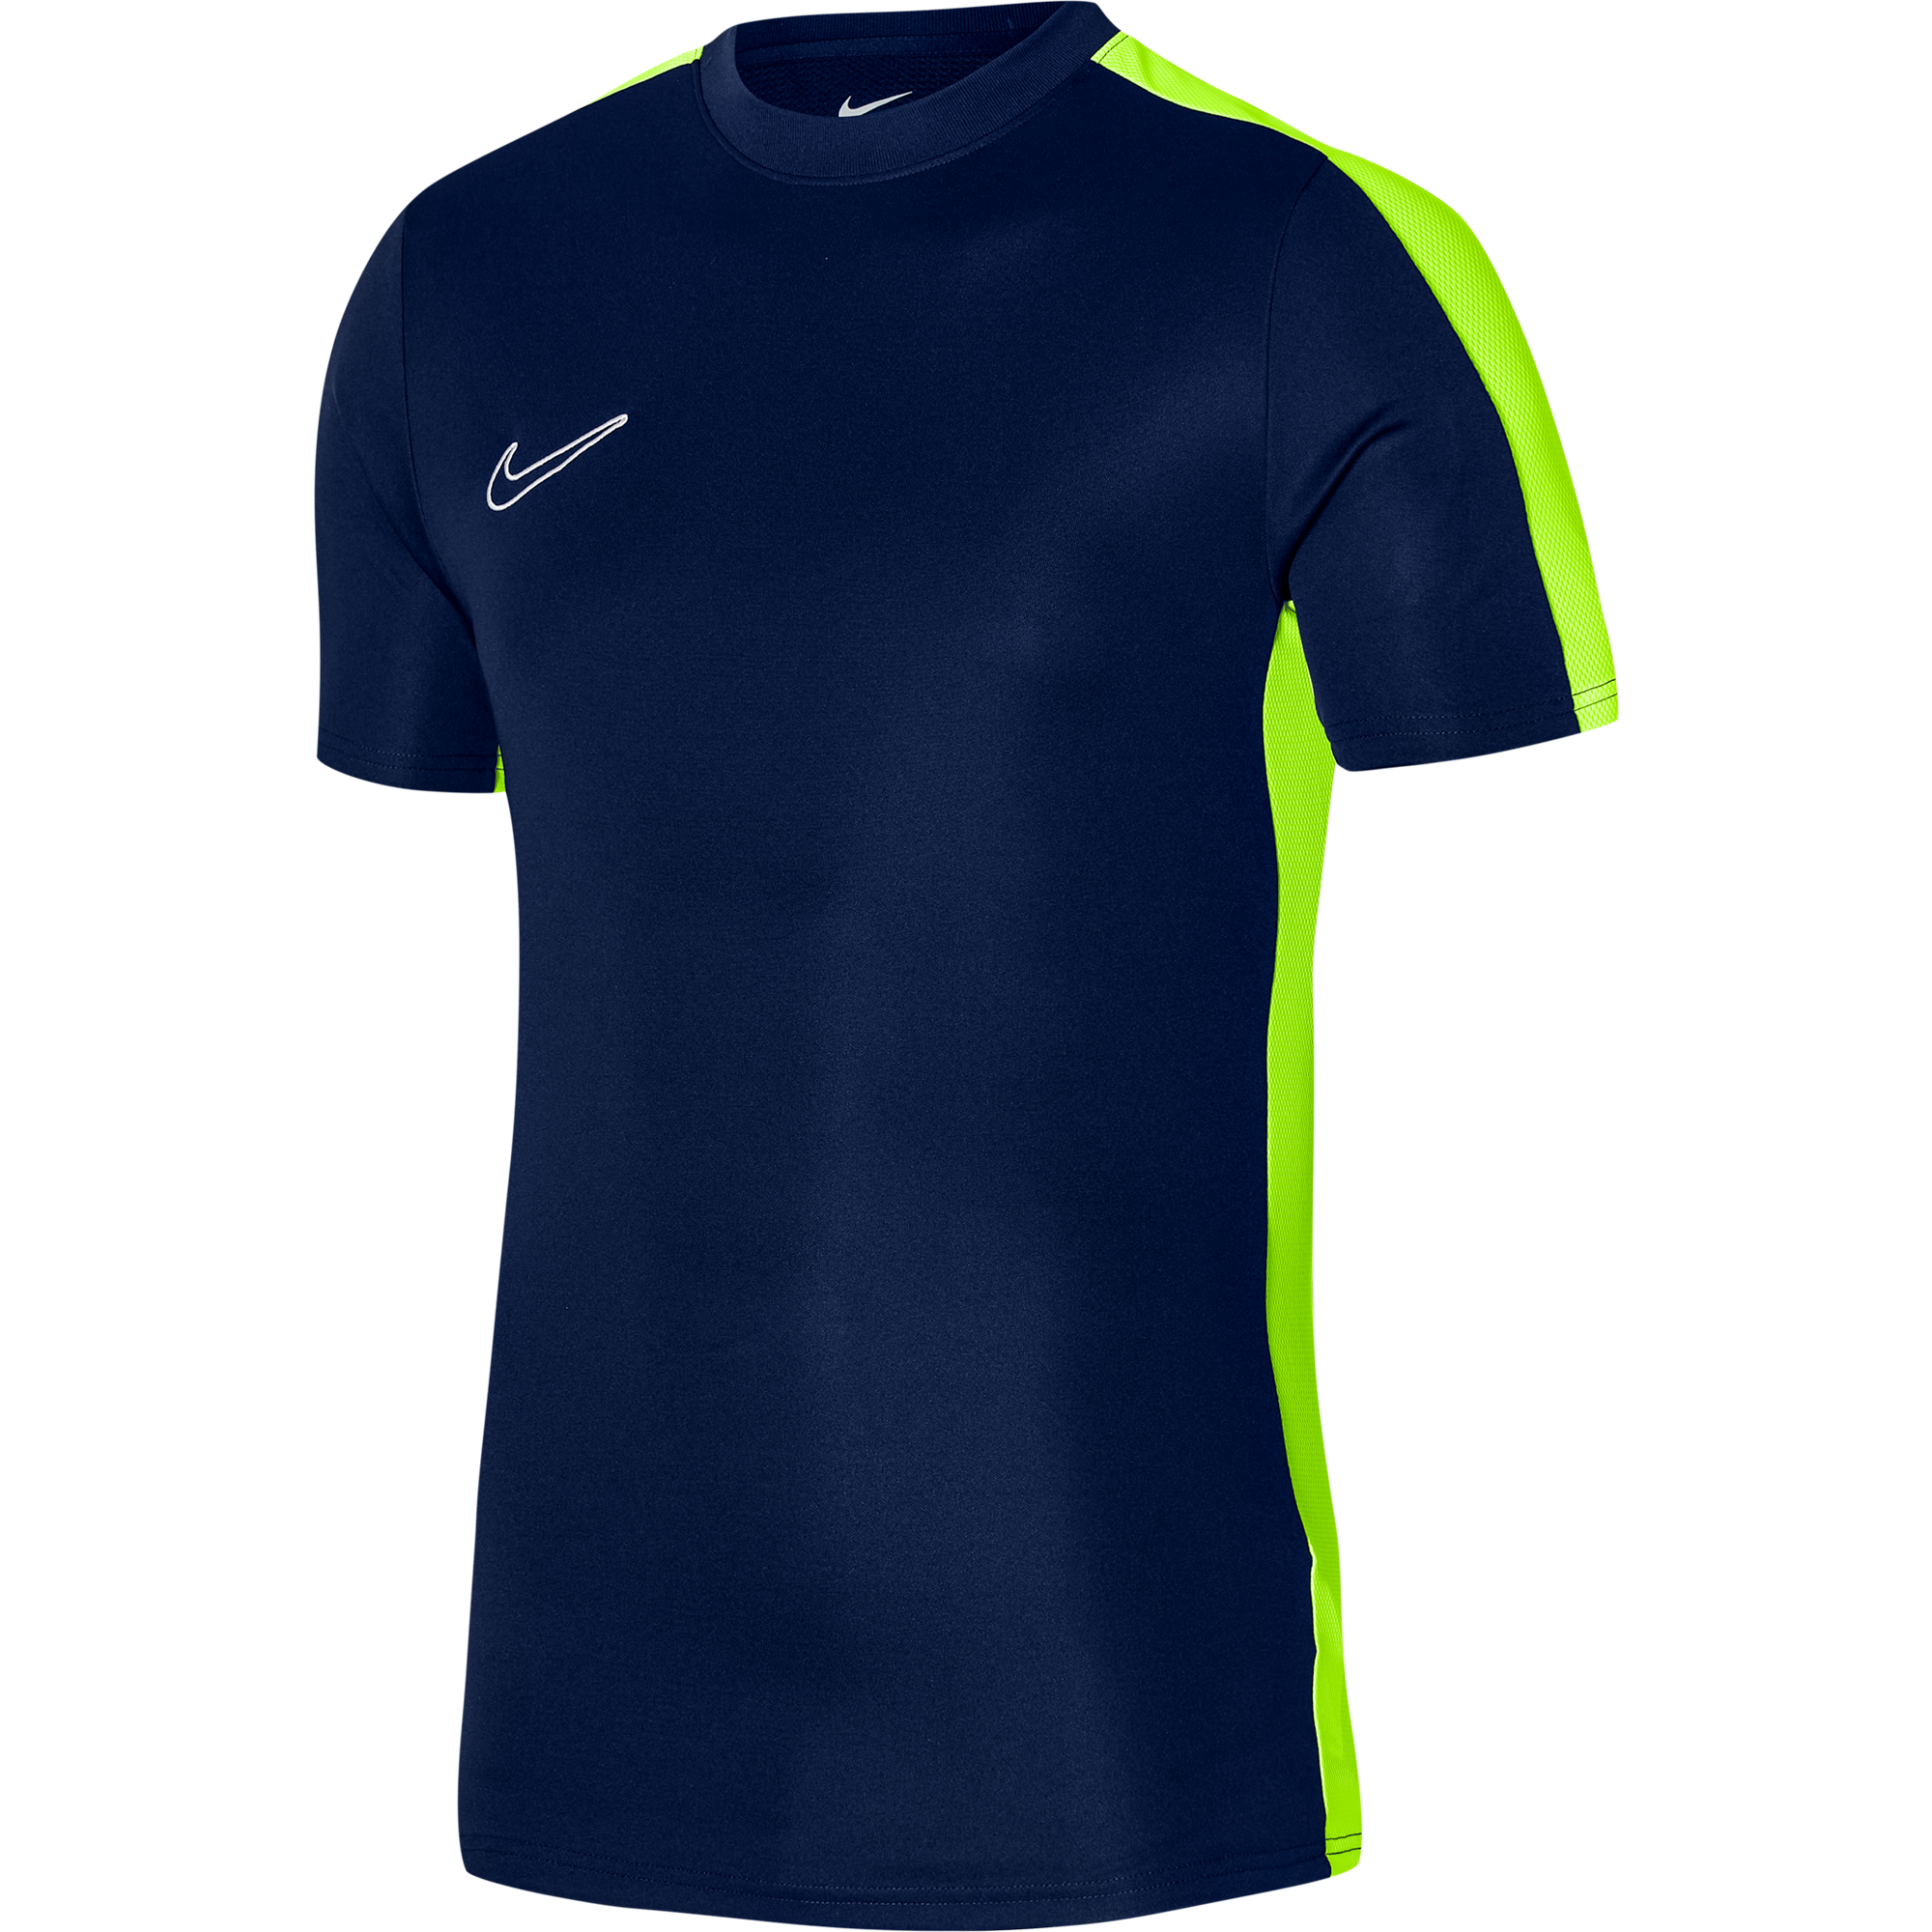 Nike Dri FIT Short Sleeve Shirt in Obsidian/Volt/White